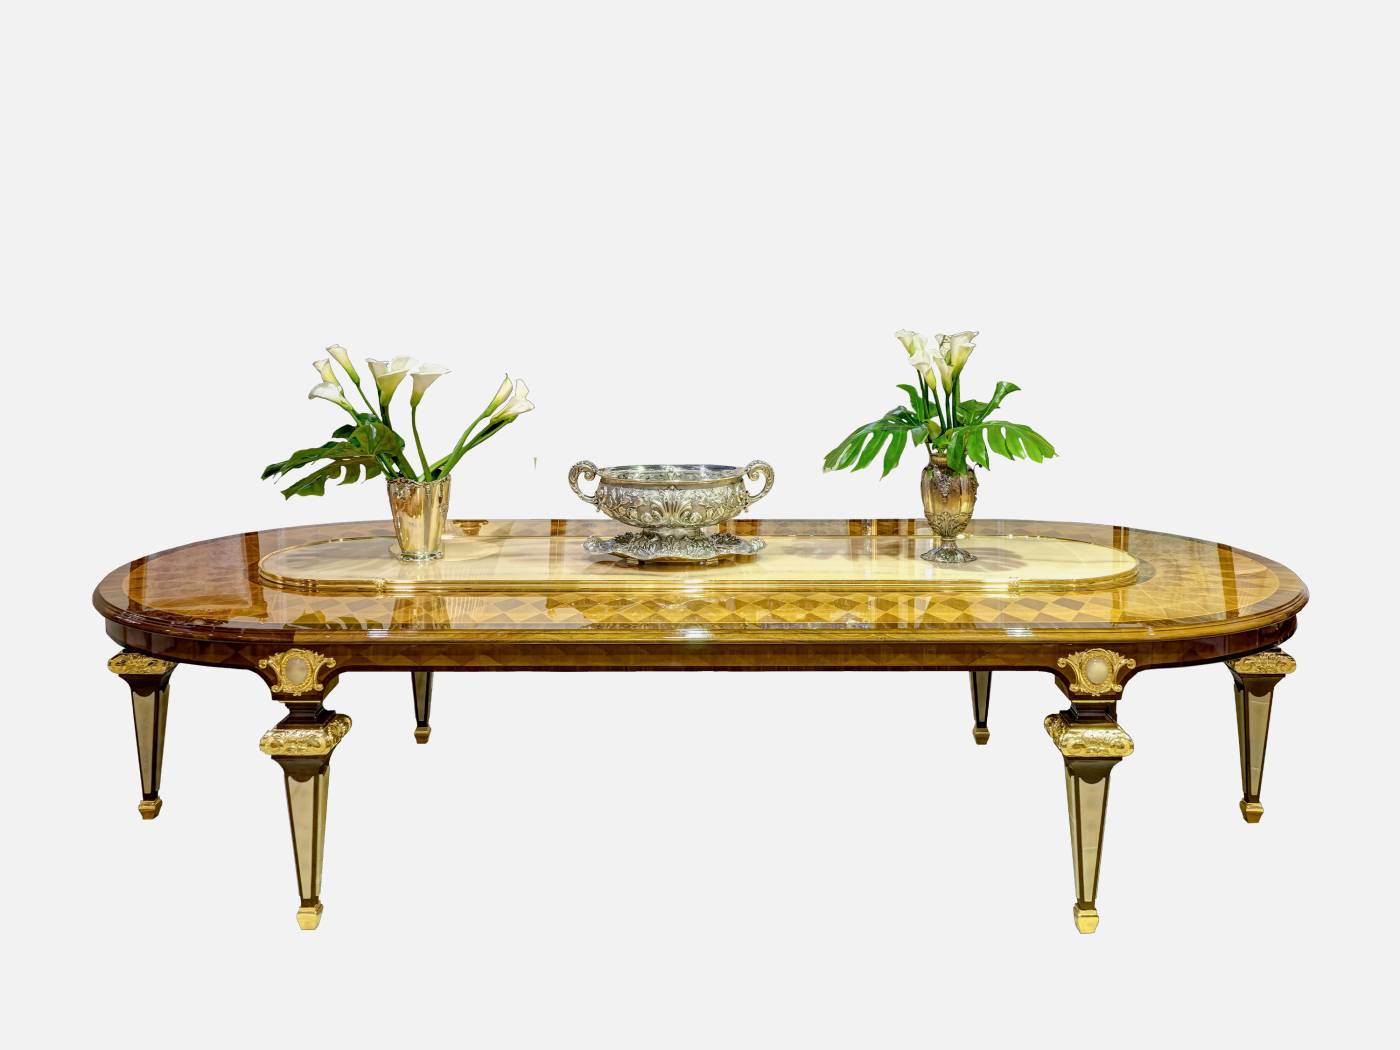 ART. 2070 – C.G. Capelletti Italian Luxury Classic Tables. Made in Italy classic interior design